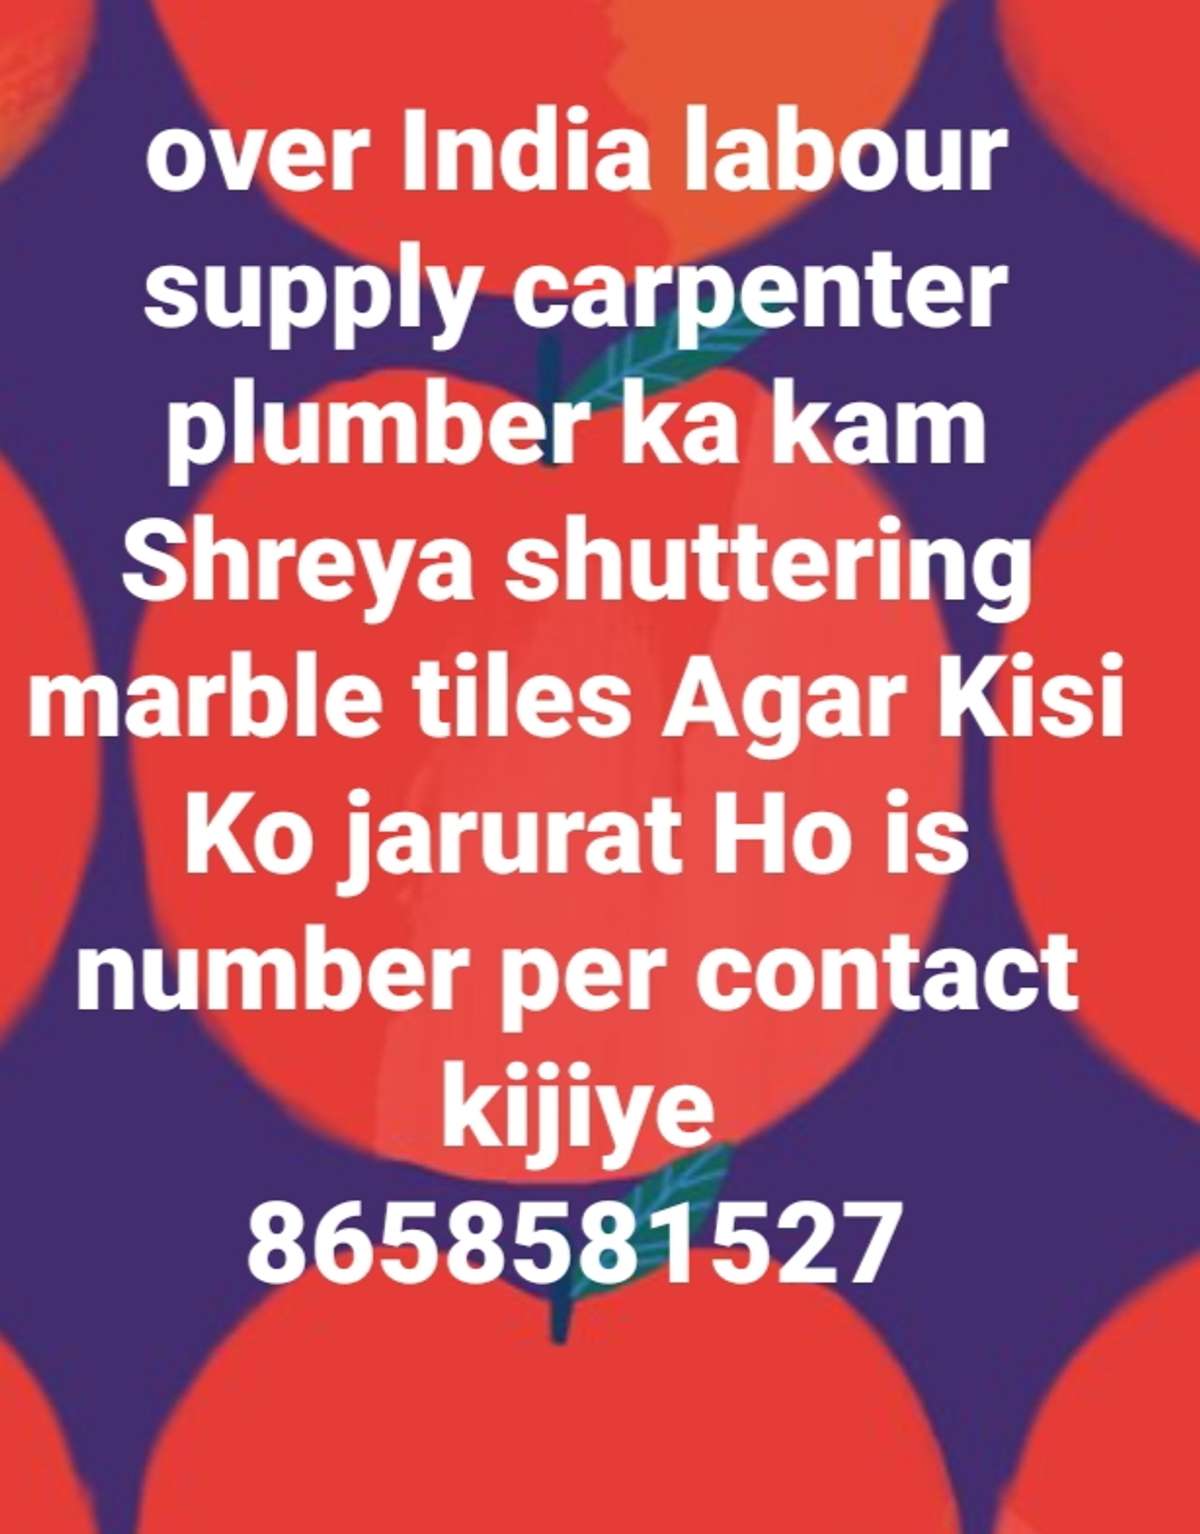 over India labour supply carpenter plumber ka kam Shreya shuttering marble tiles Agar Kisi Ko jarurat Ho is number per contact kijiye
8xxxxxxxxxx7